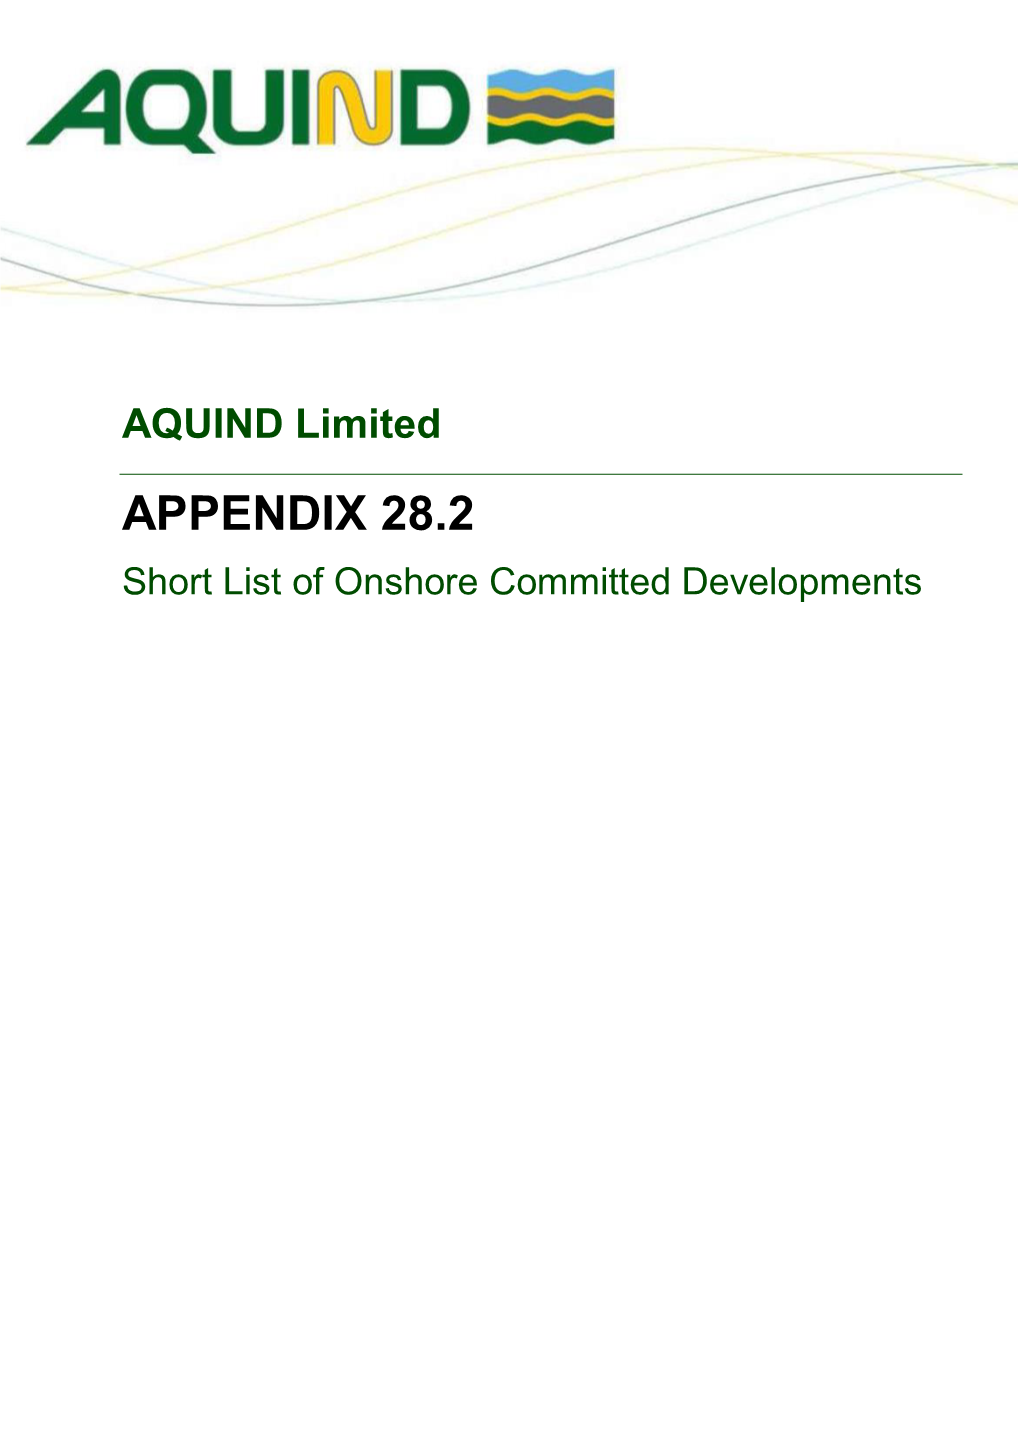 APPENDIX 28.2 Short List of Onshore Committed Developments